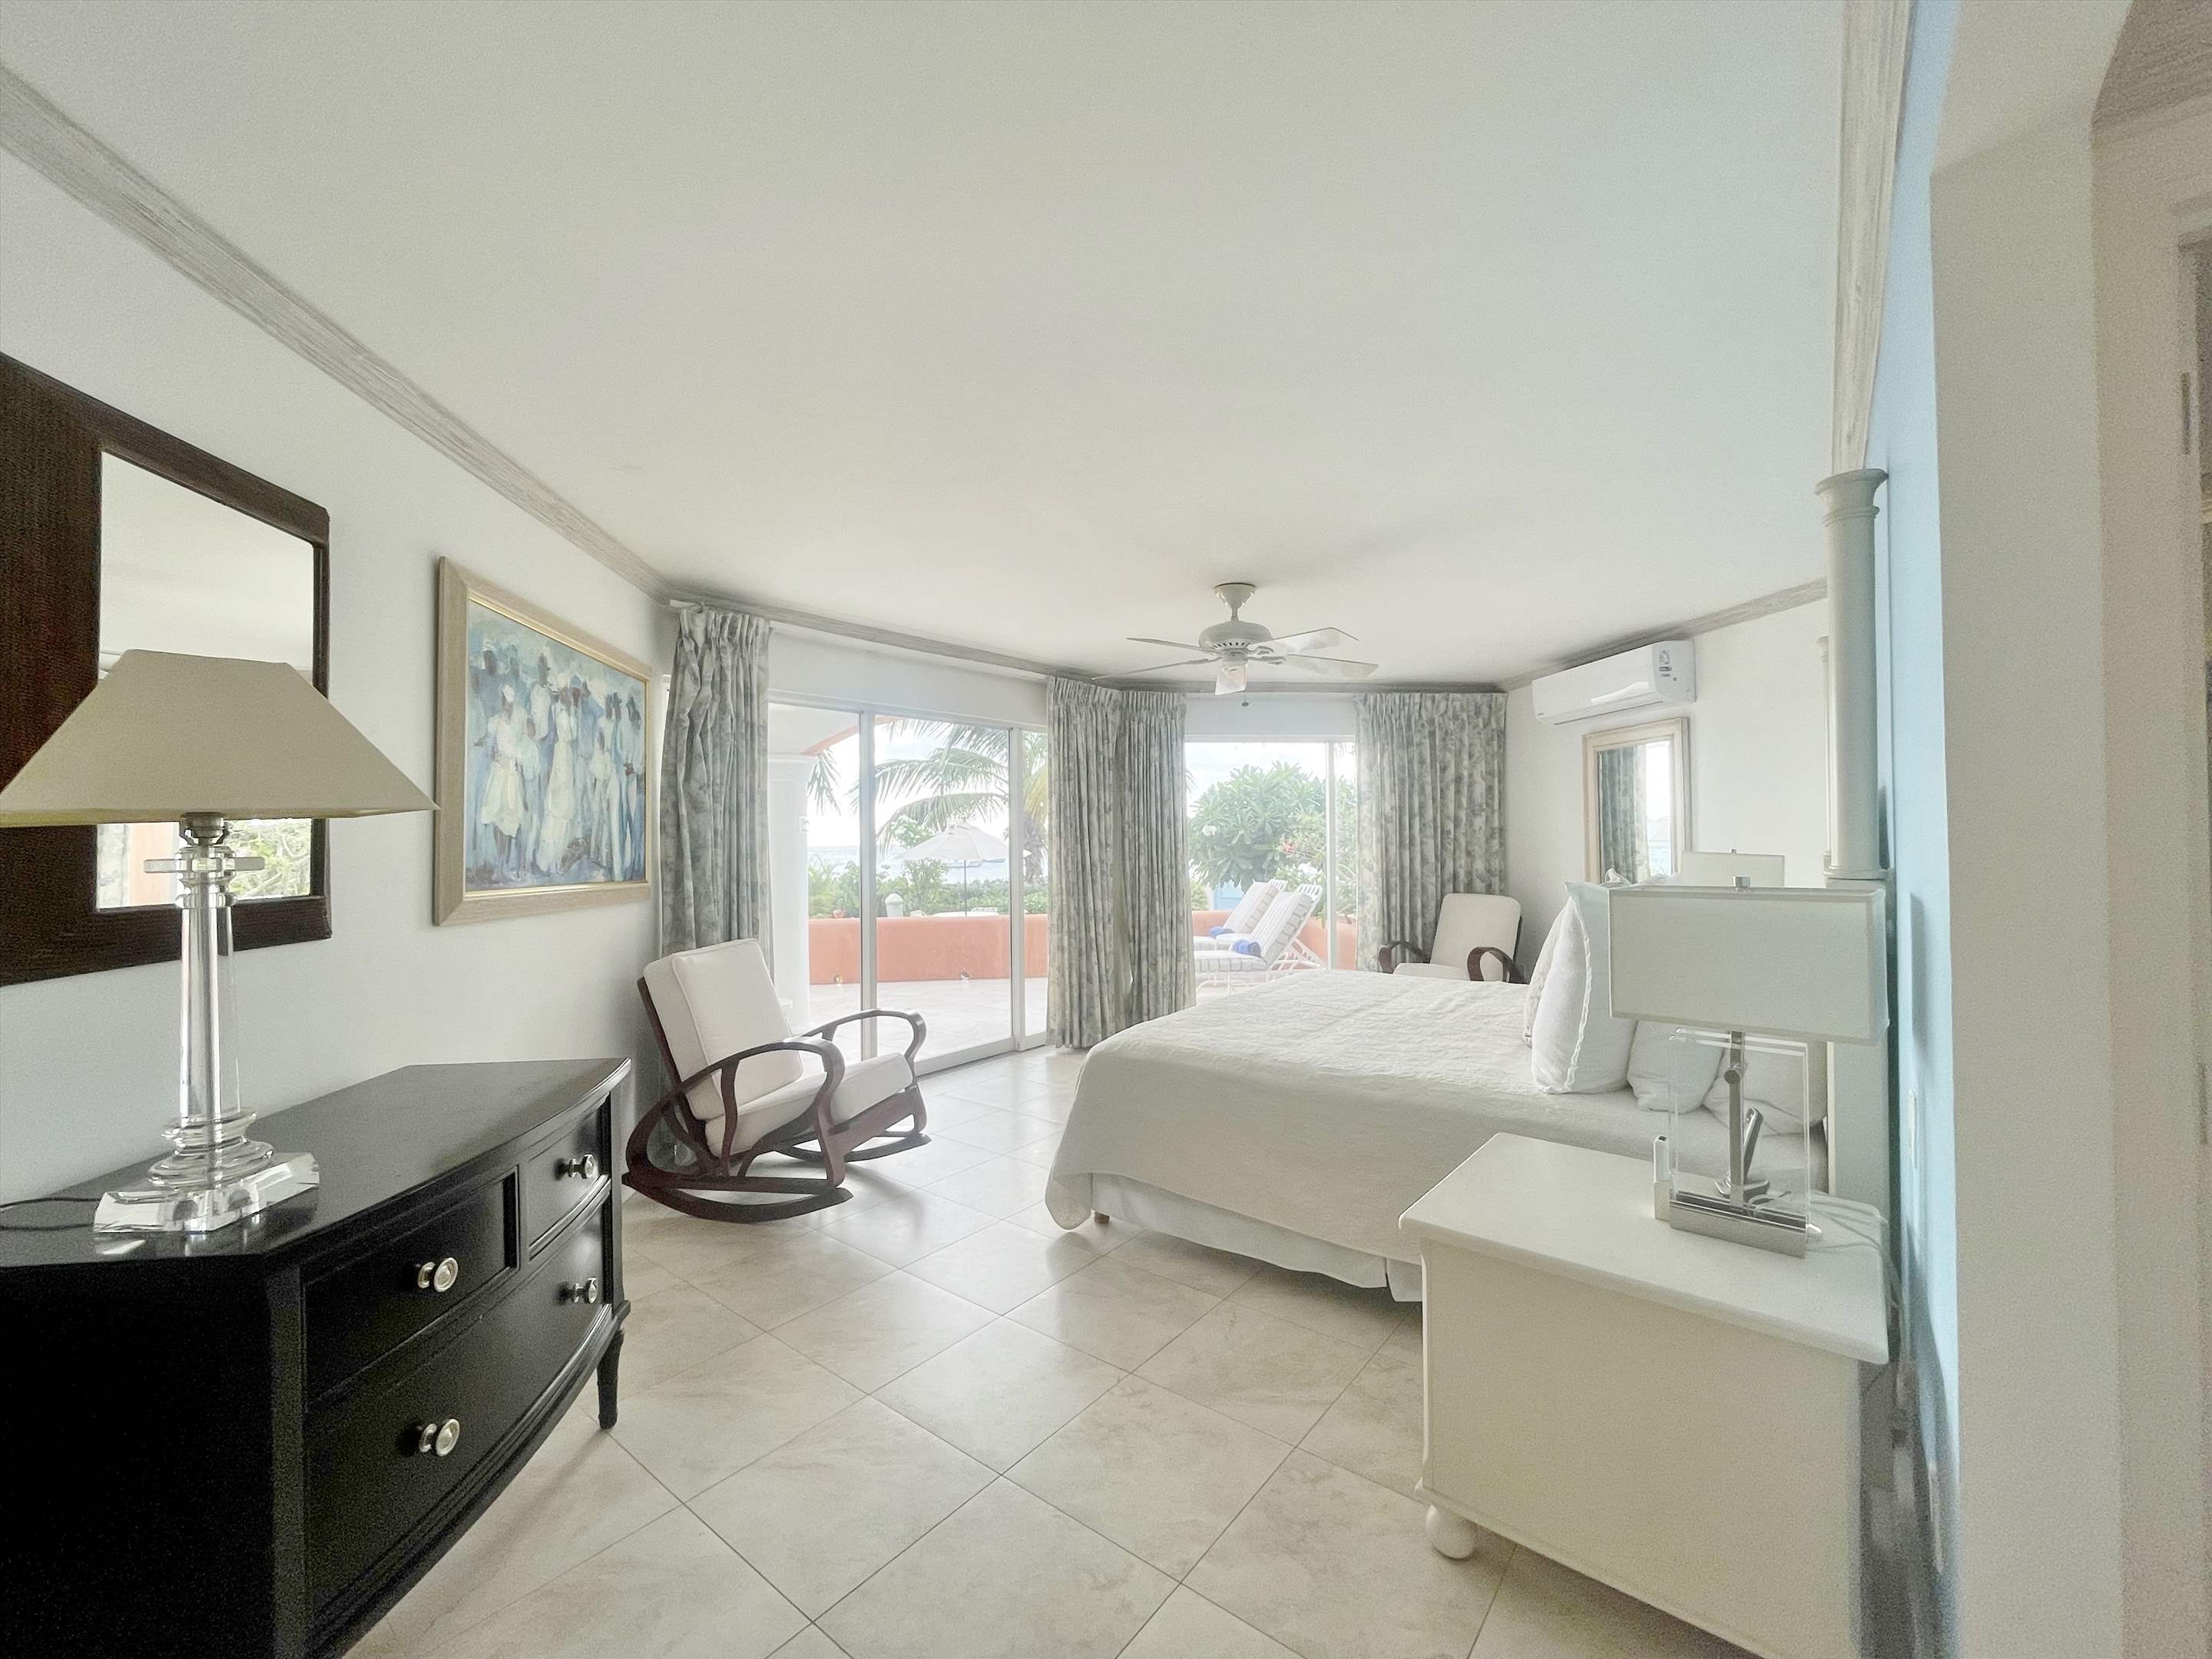 Villas on the Beach 103, 2 bedroom, 2 bedroom apartment in St. James & West Coast, Barbados Photo #12